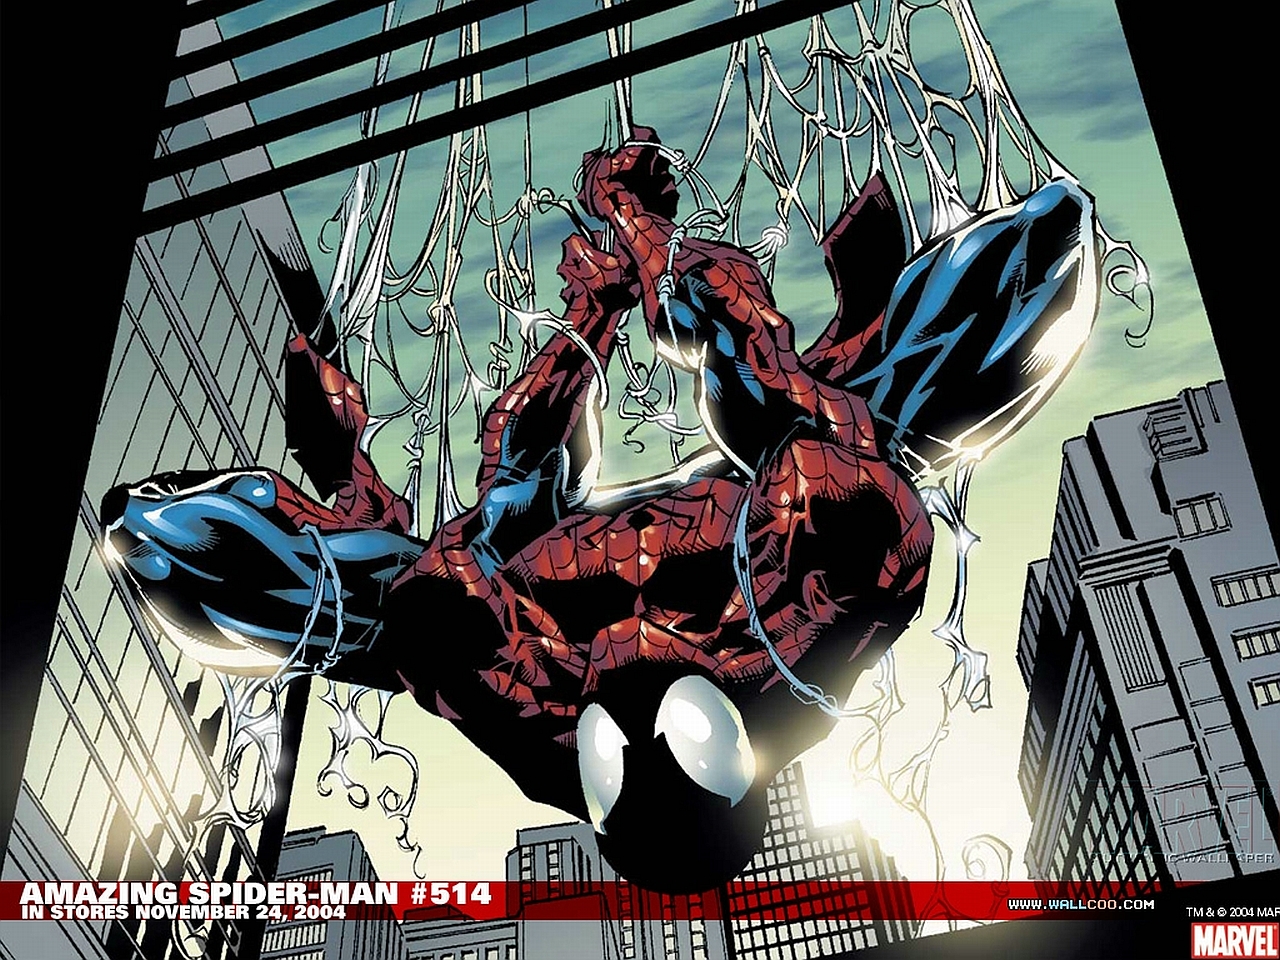 Spider-Gwen Marvel Comic Wallpapers